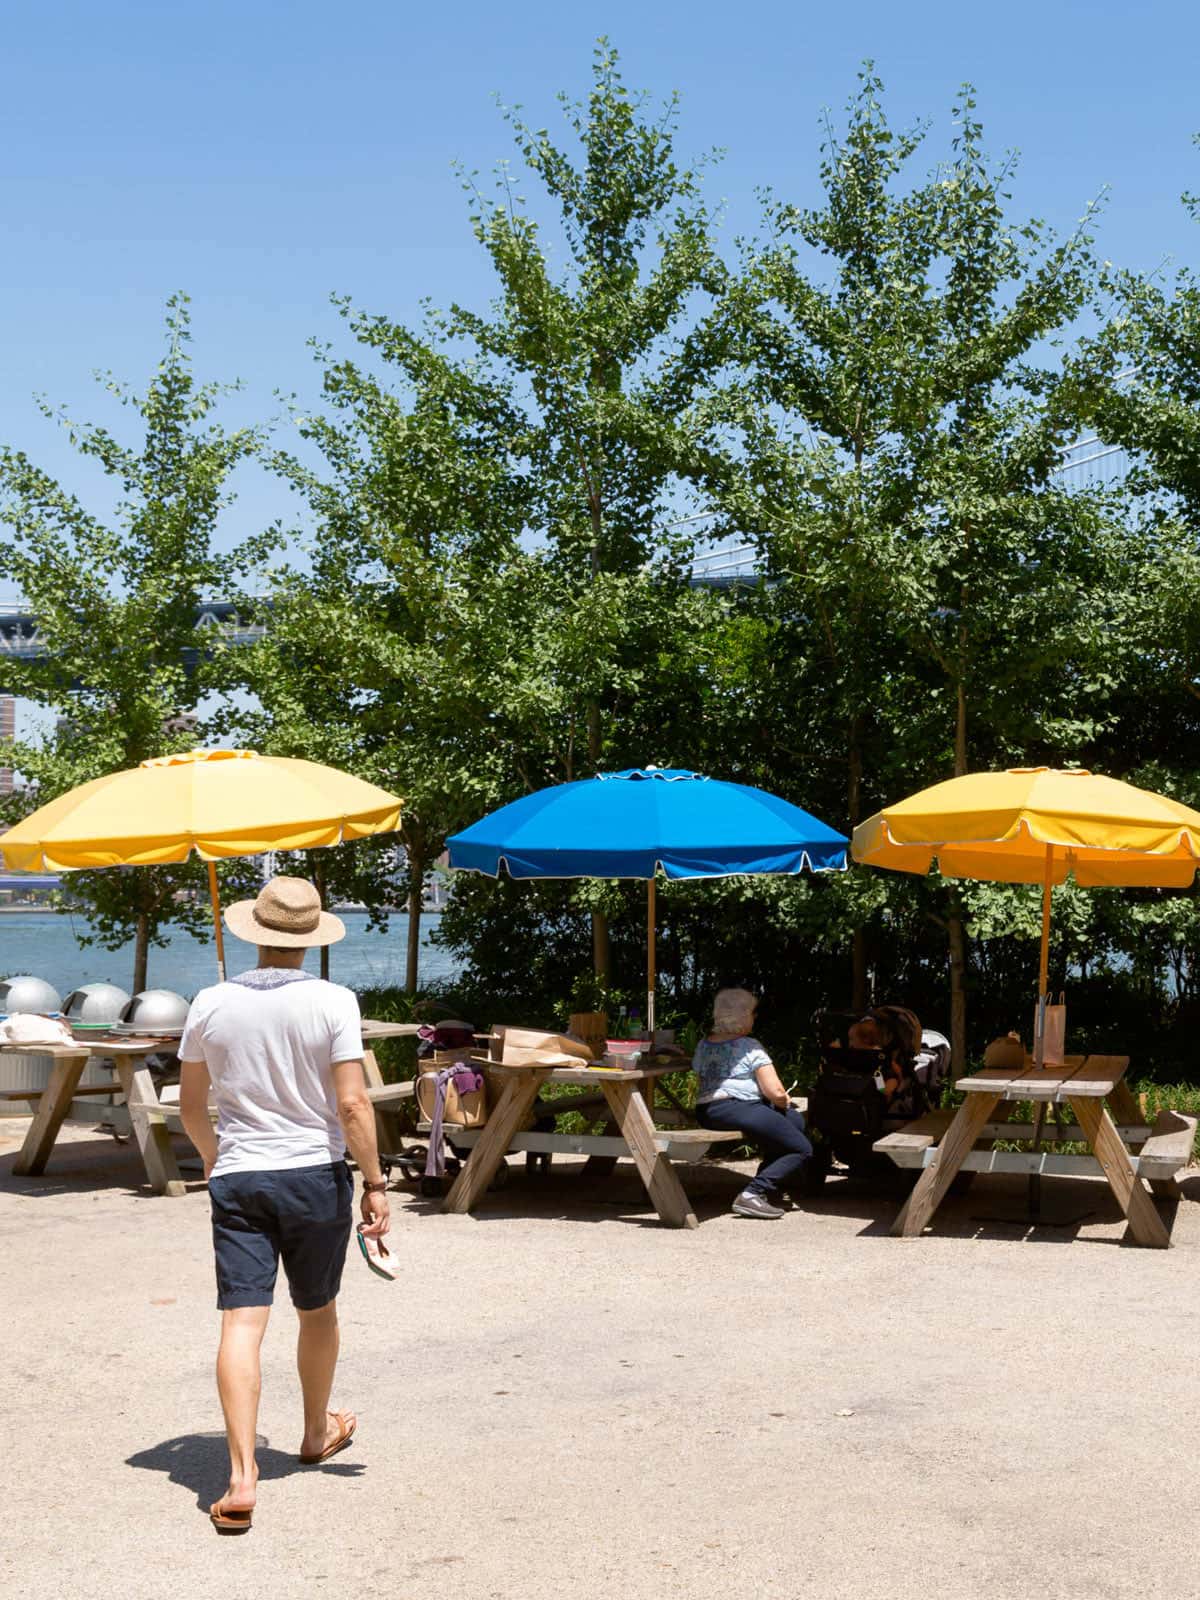 Man walking towards picnic tables under umbrellas on a sunny day.